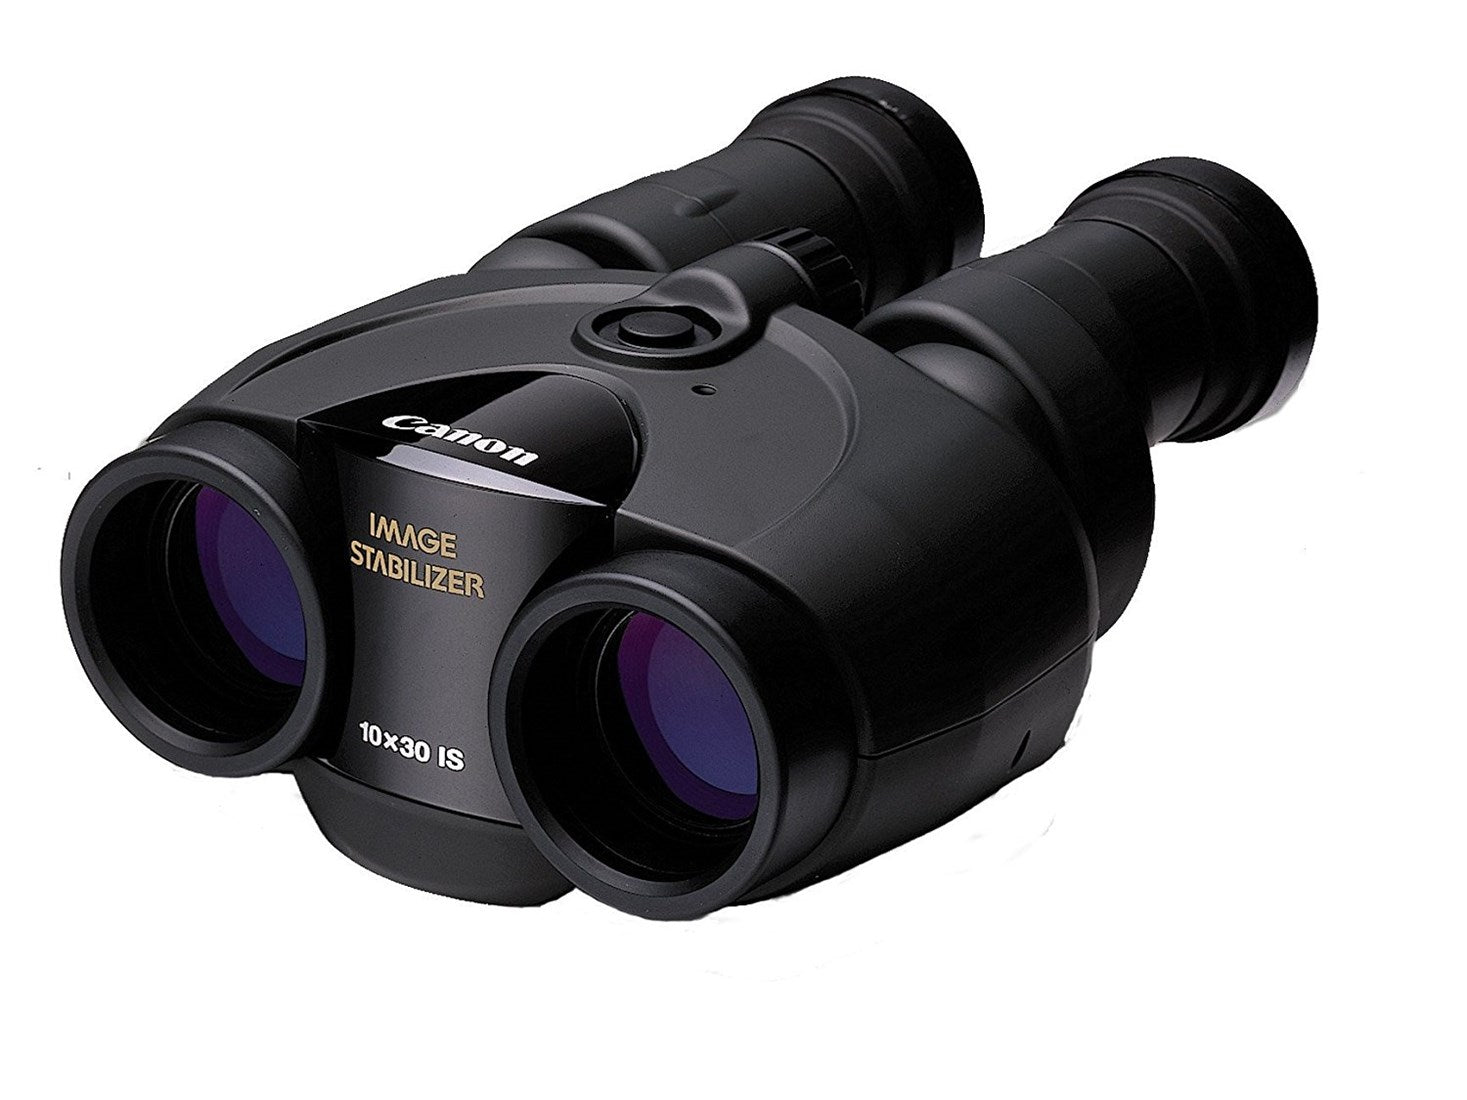 Canon Binoculars 10x30 IS II Image Stabilised - Product Photo 1 - Side View